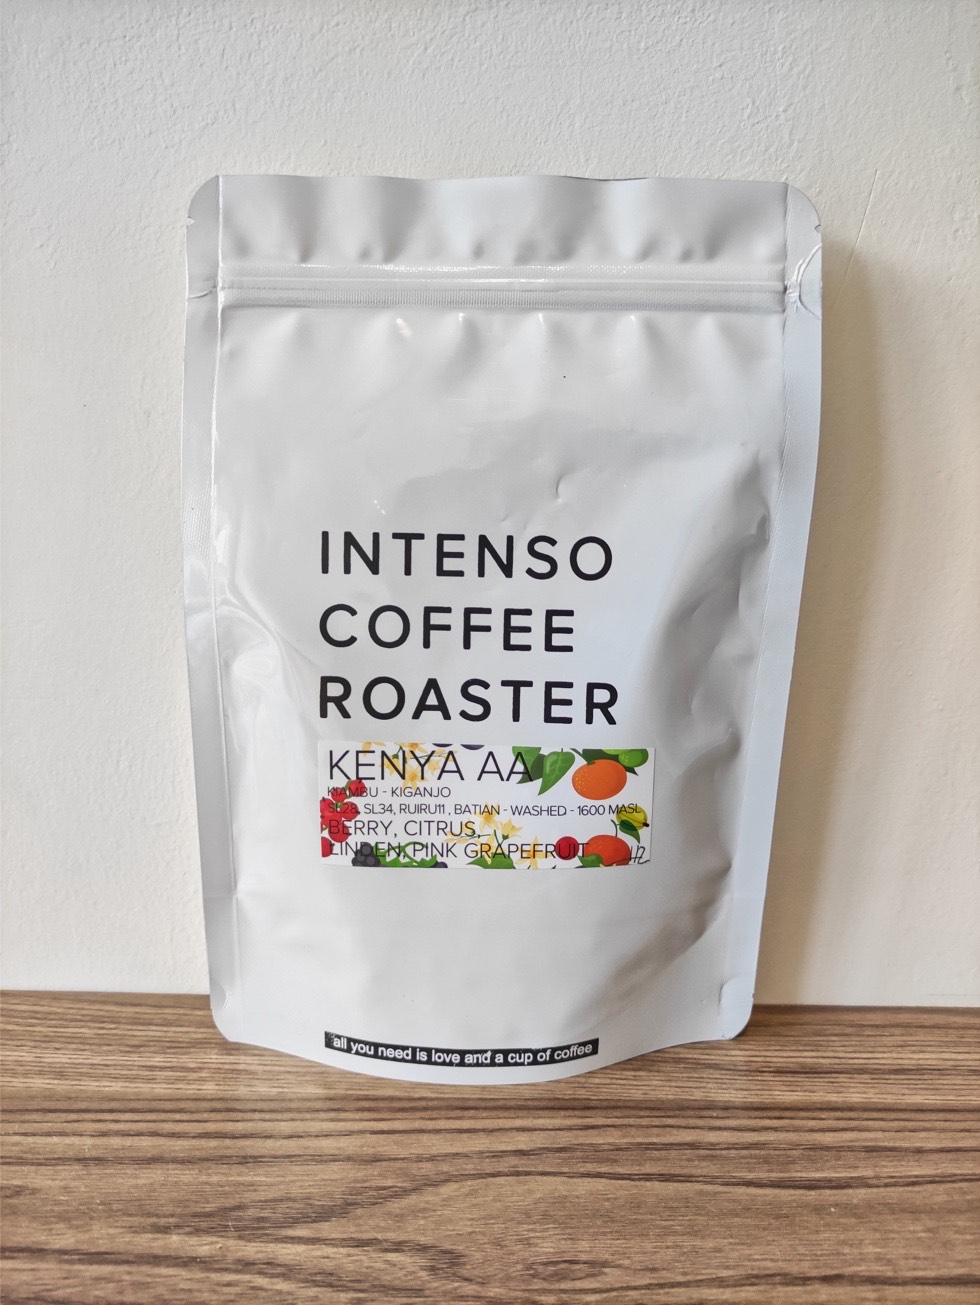 Intenso Coffee Roaster Kenya AA